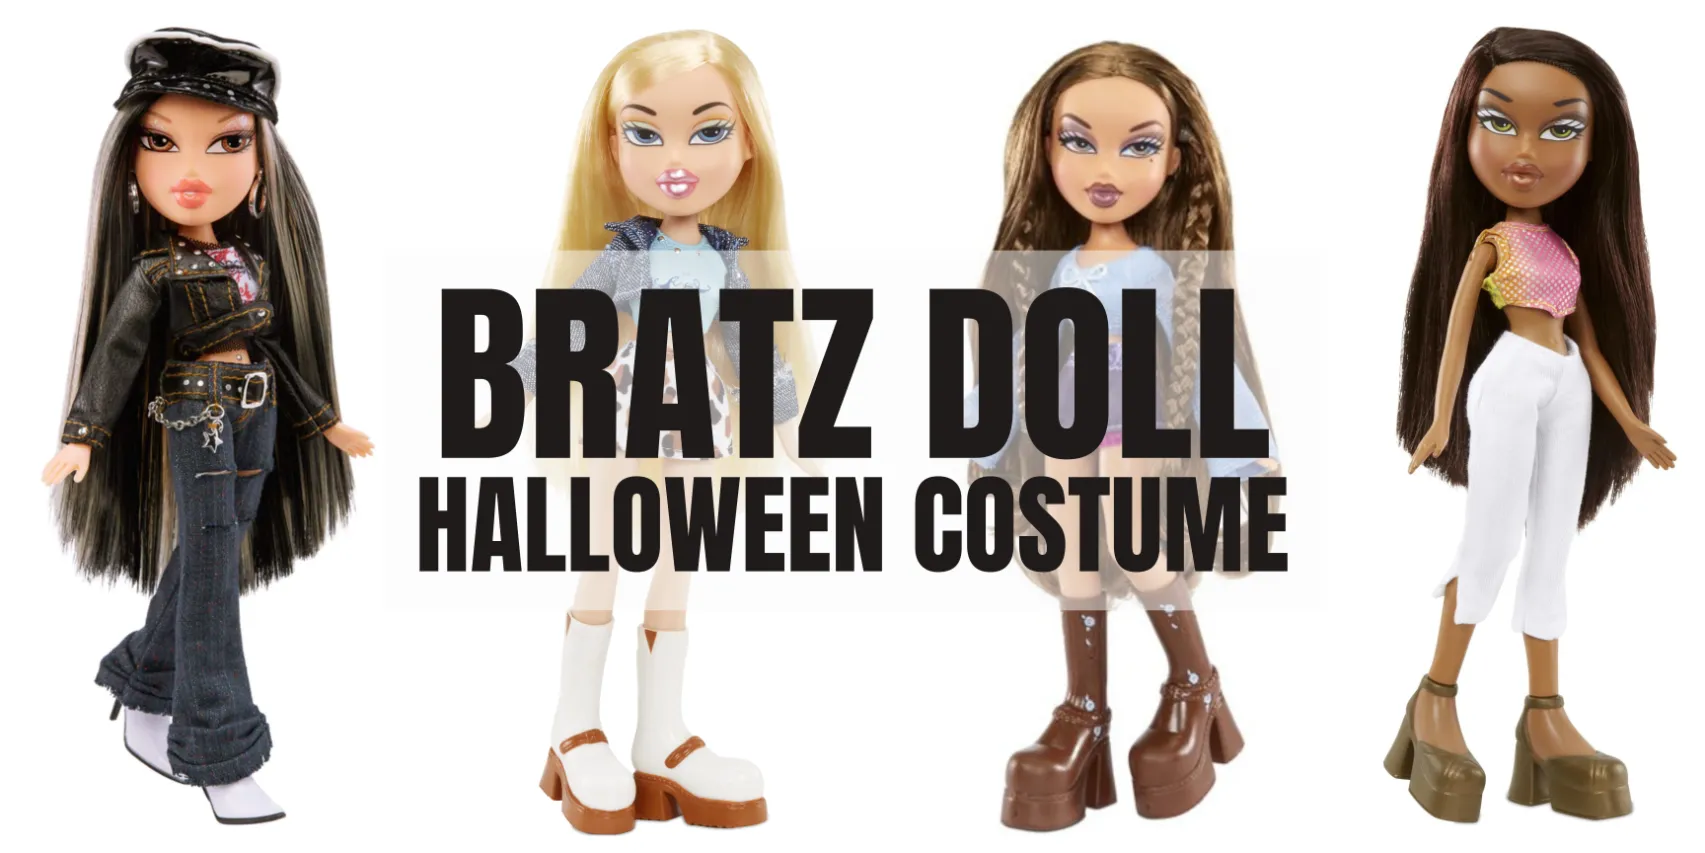 cloe  American girl doll sets, American girl doll, Bratz doll outfits